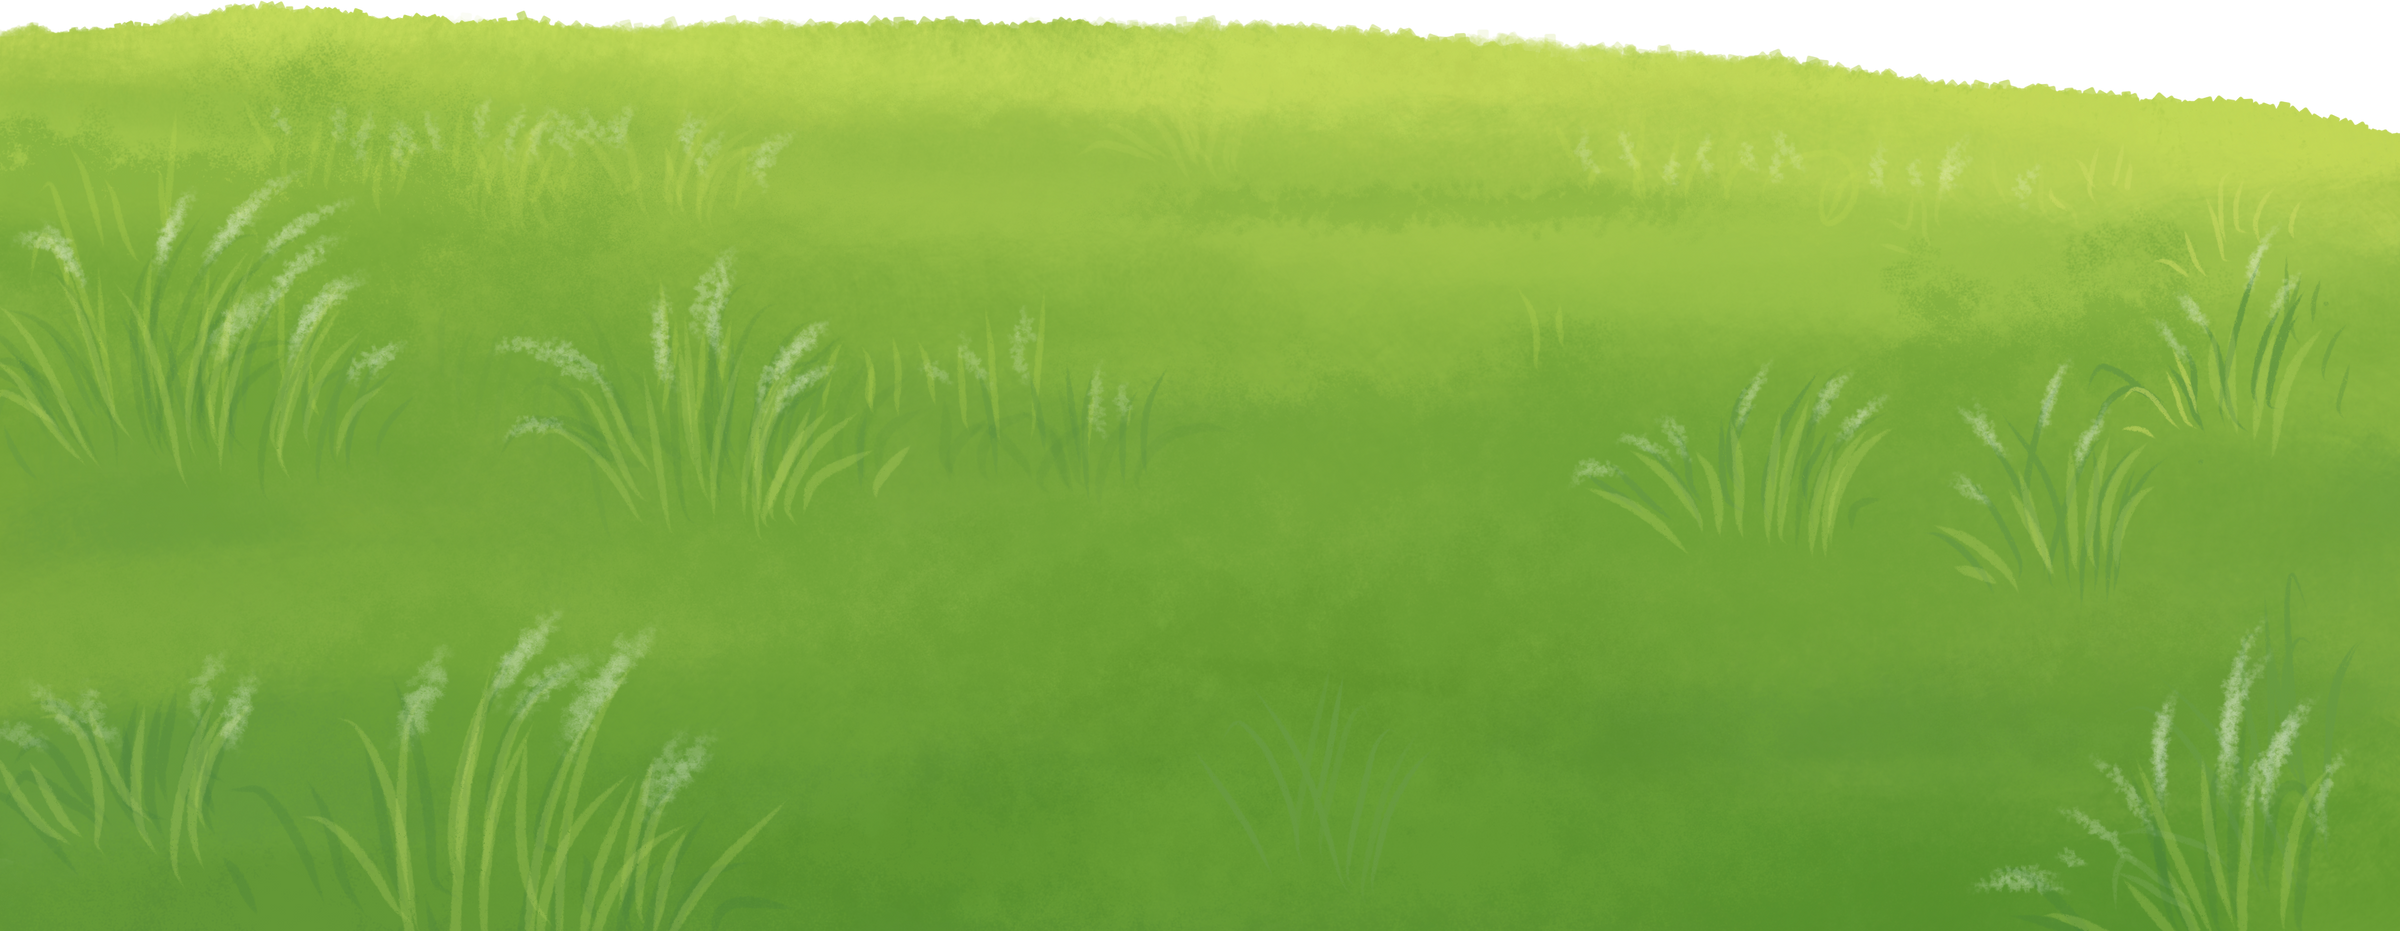 Grass landscape